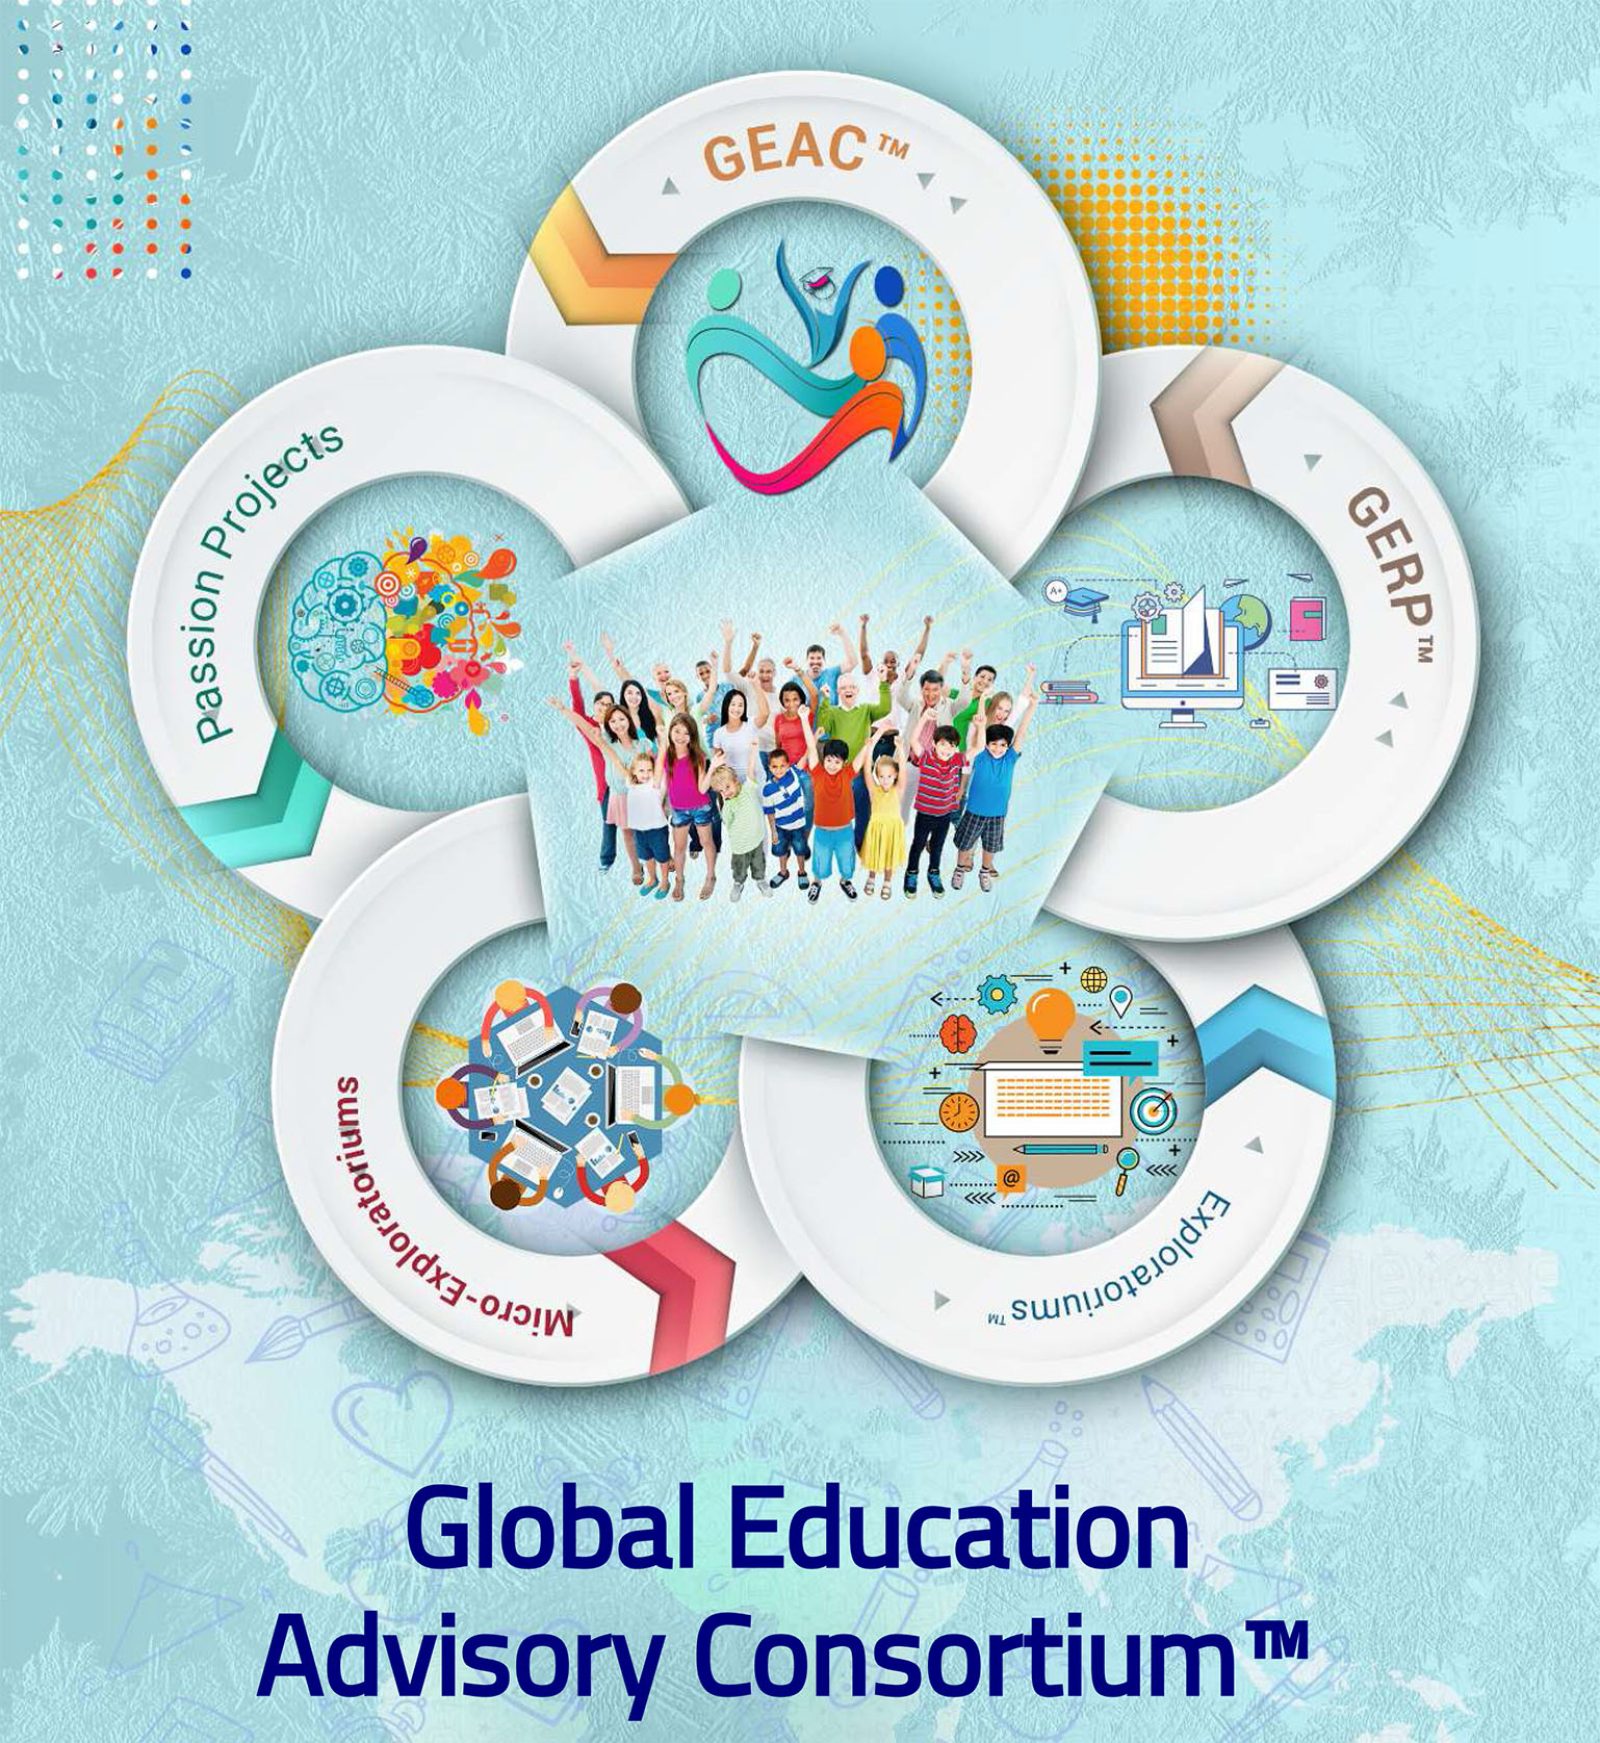 The Global Education Advisory Consortium Profile